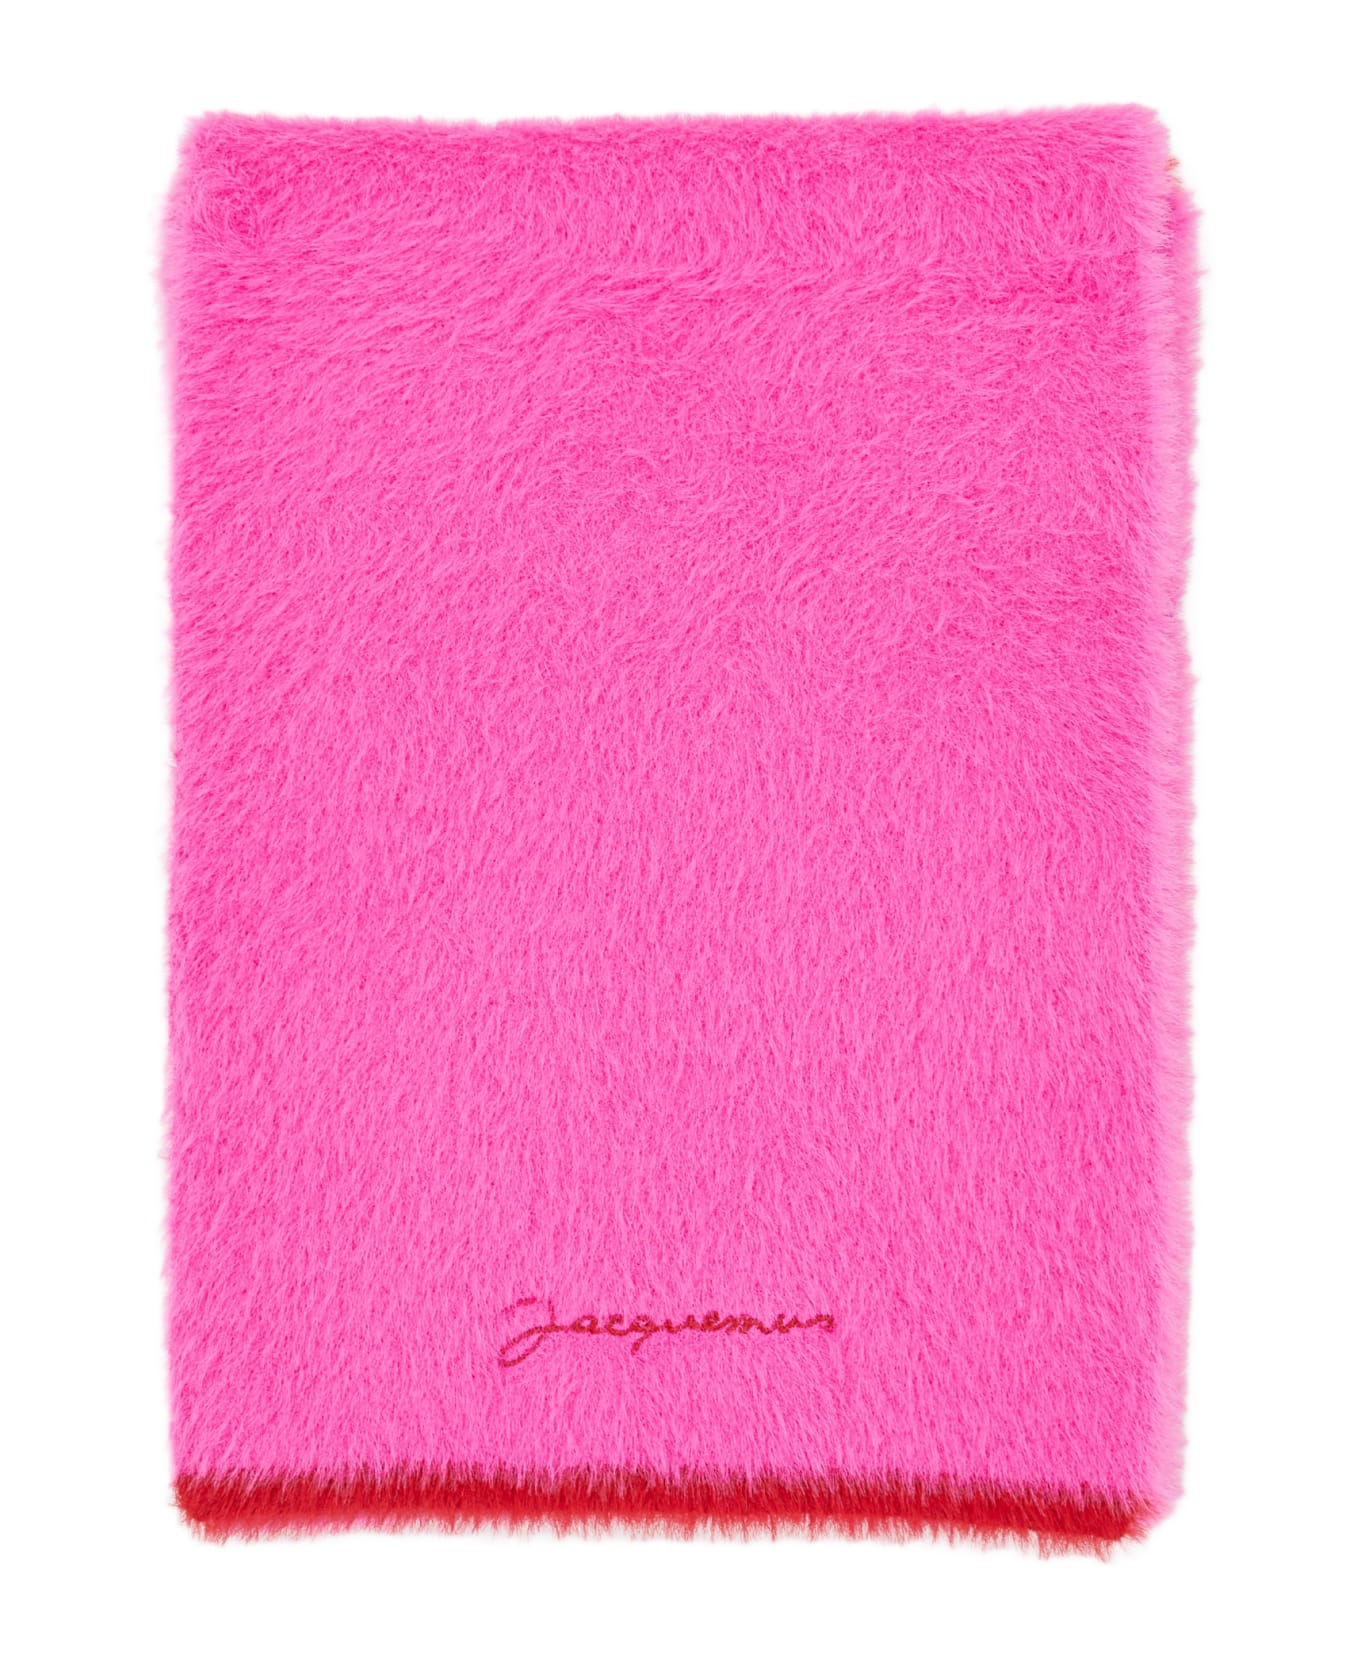 Jacquemus L'echarpe Neve Fluffy Scarf - Pink スカーフ